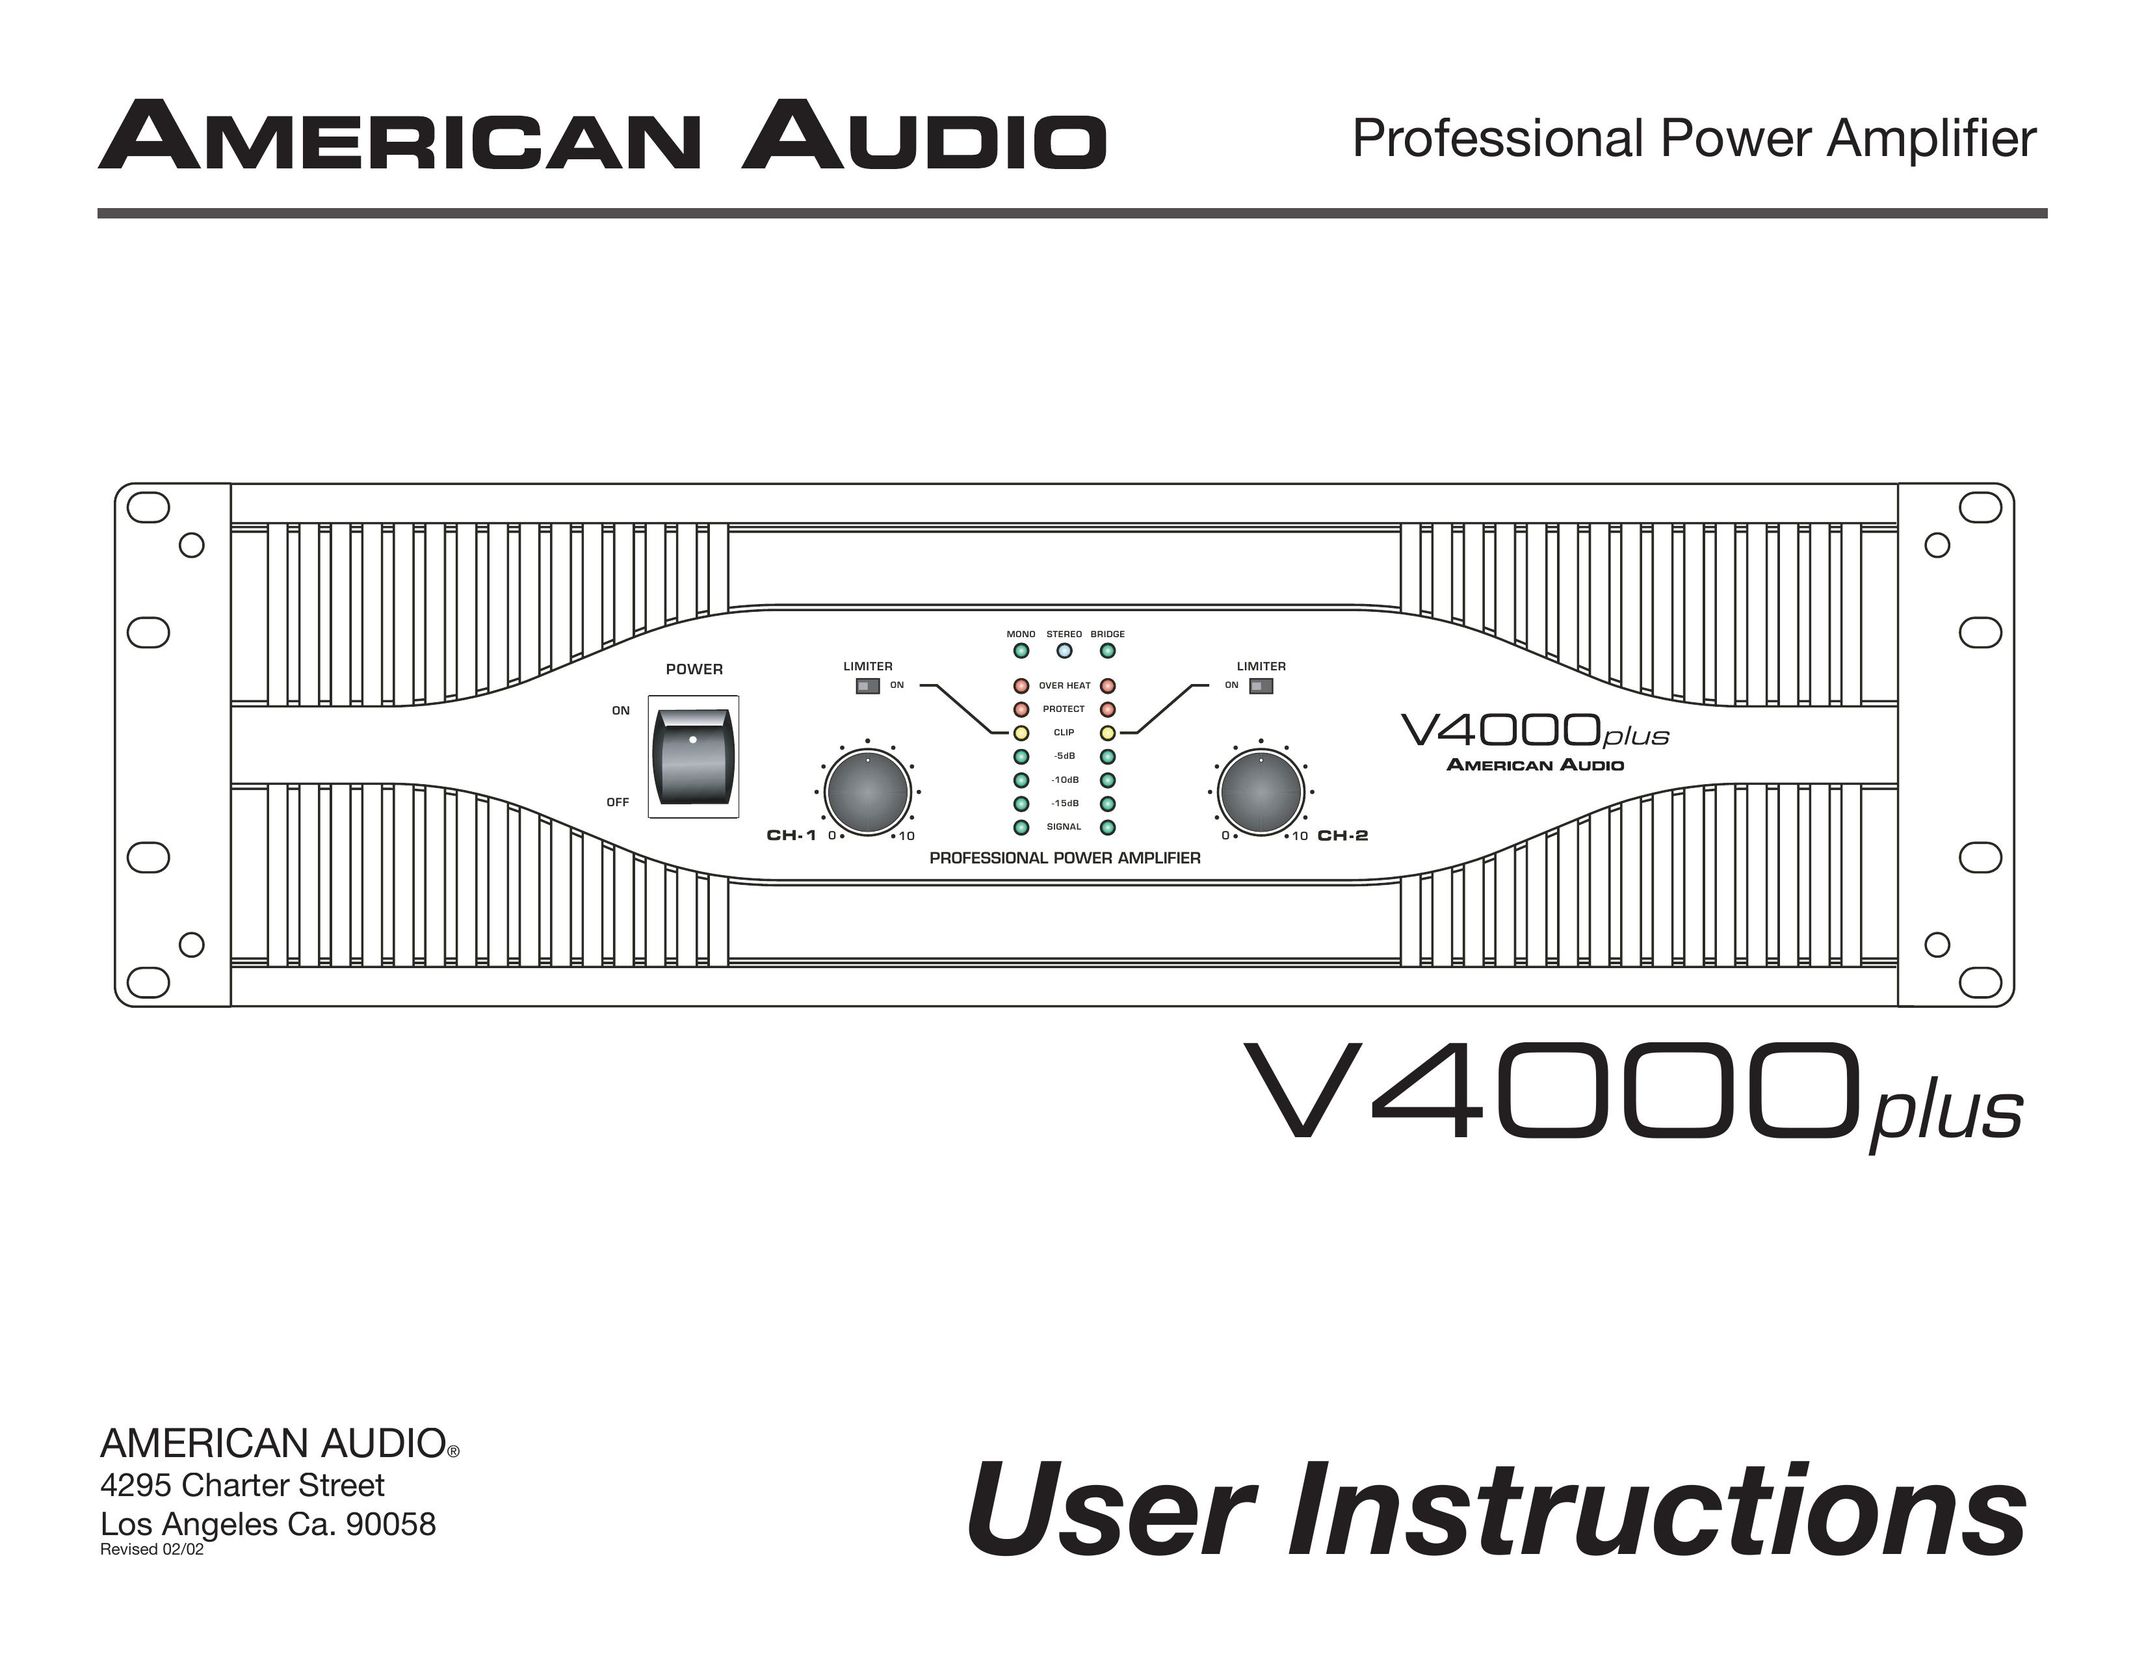 American Audio V4000 plus Stereo Amplifier User Manual